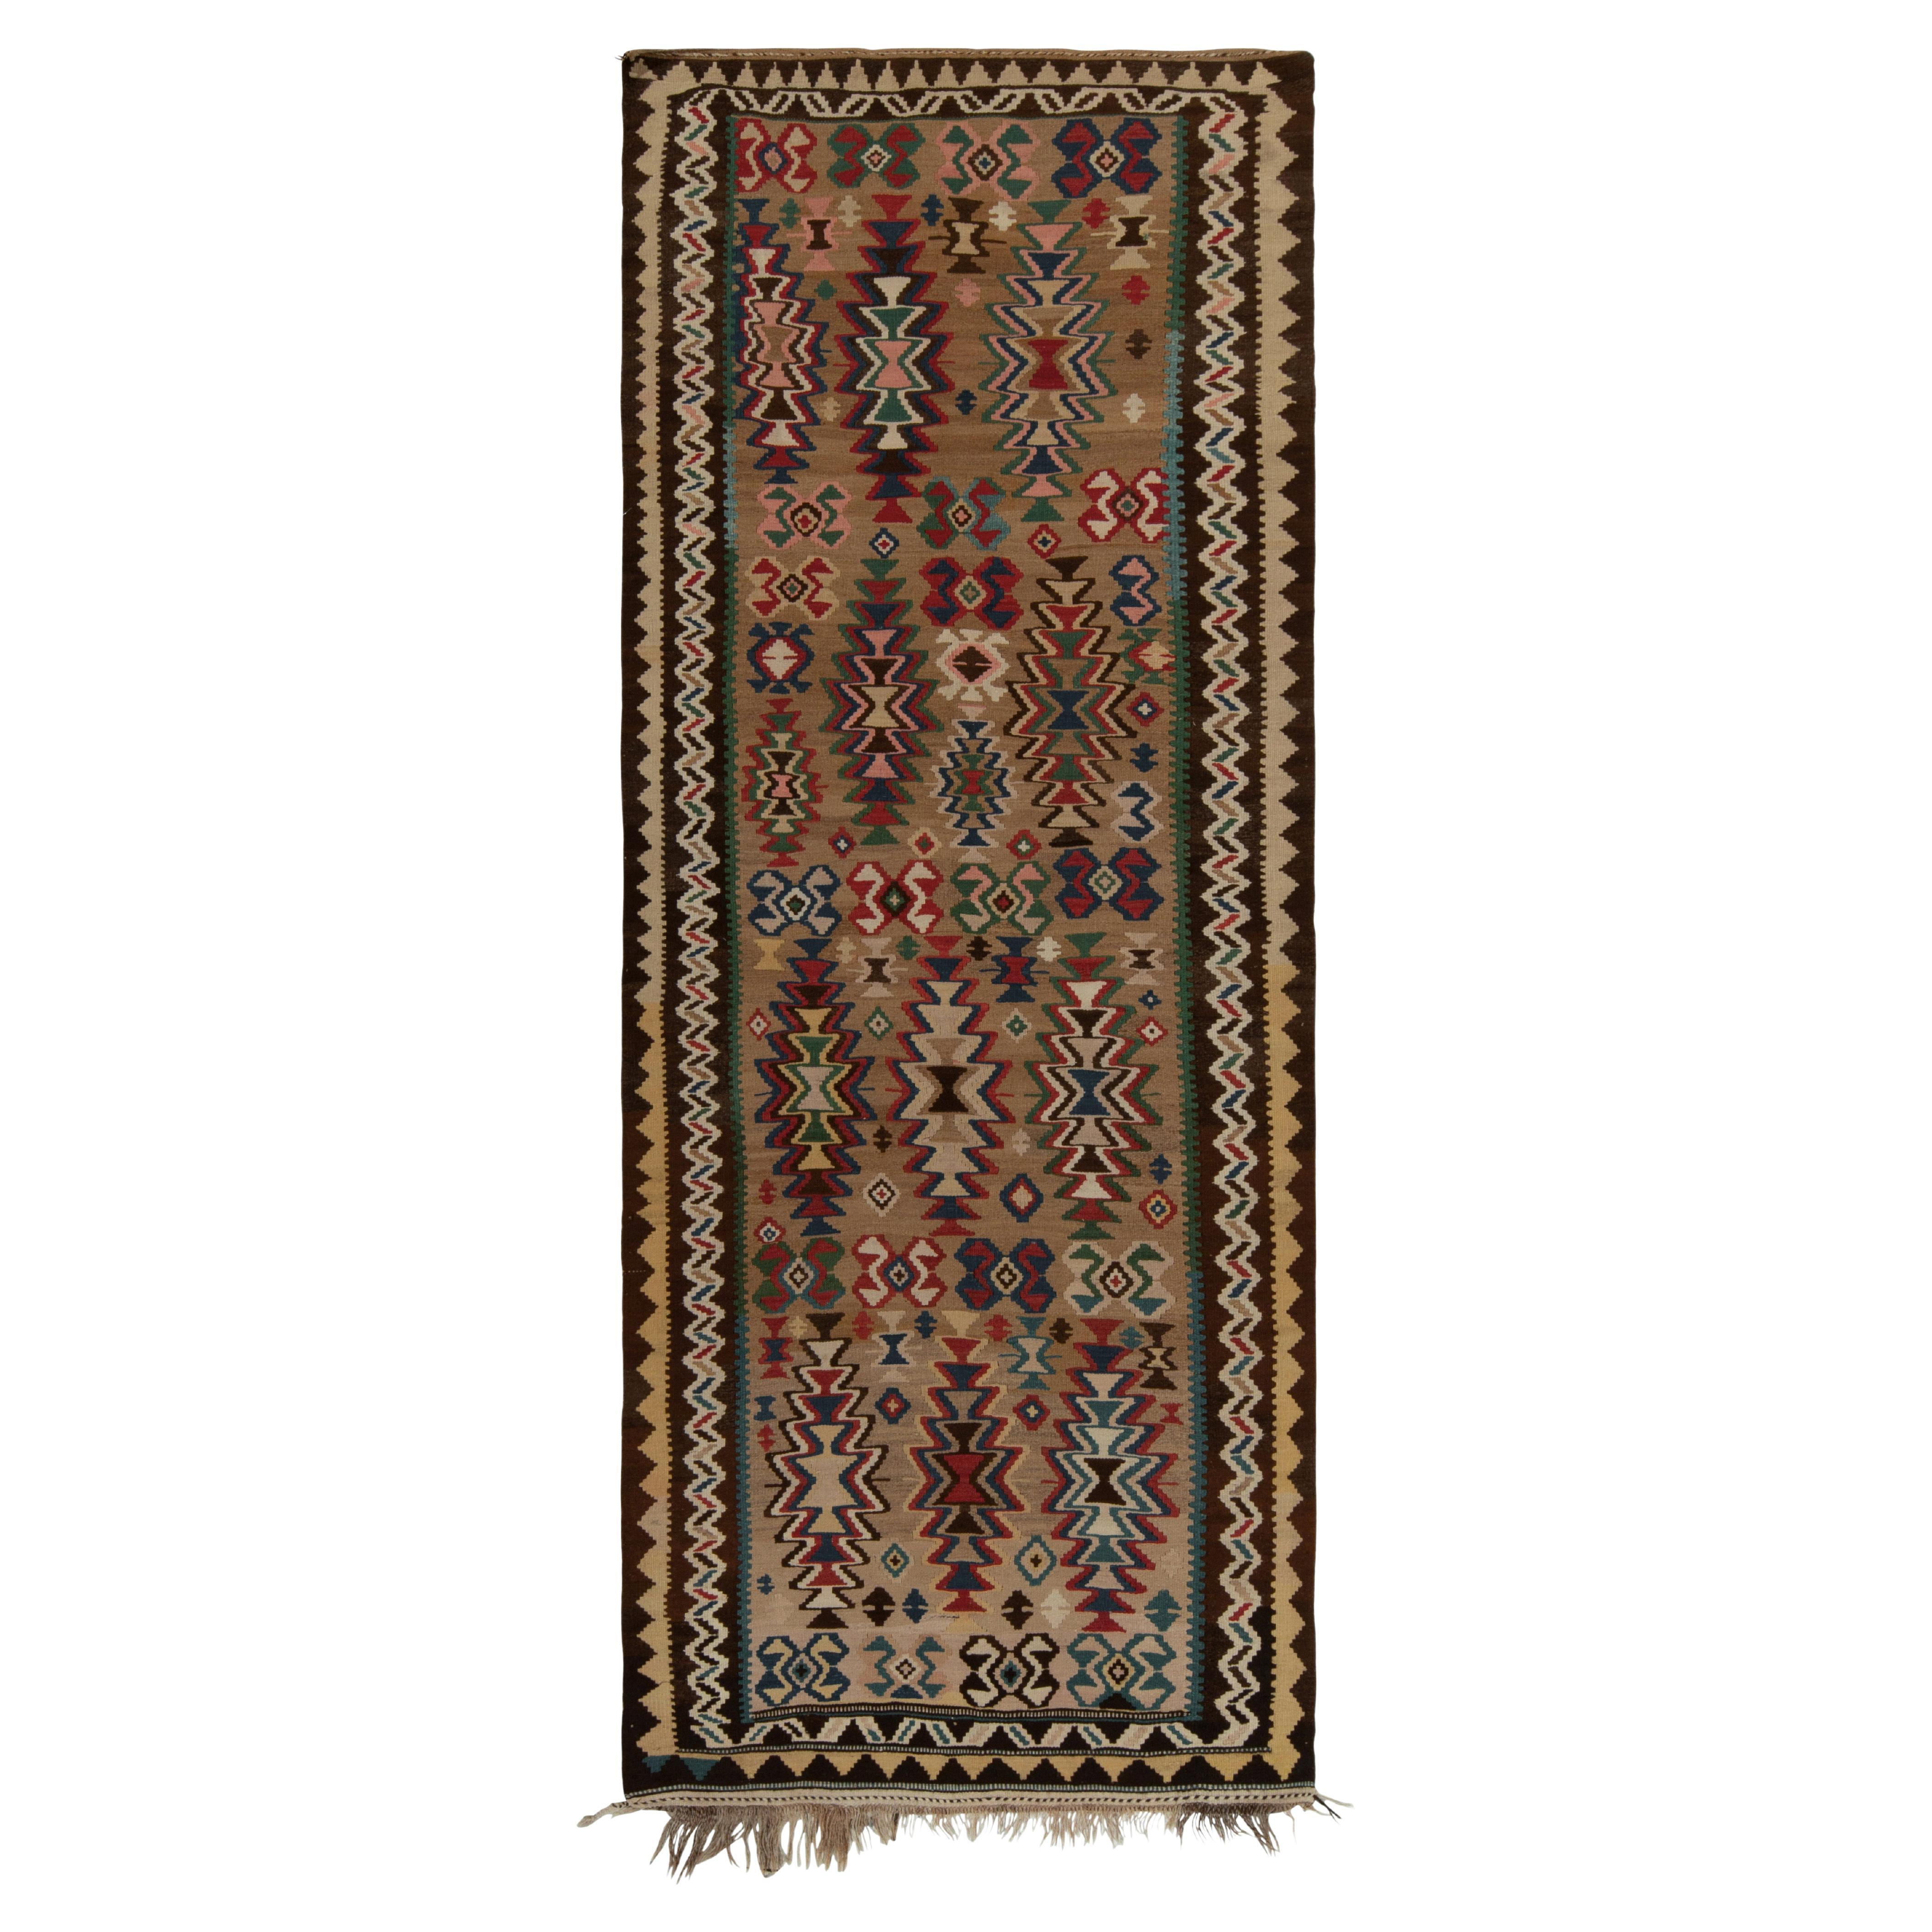 Antique Persian Kilim rug in Beige-Multicolor Tribal patterns by Rug & Kilim